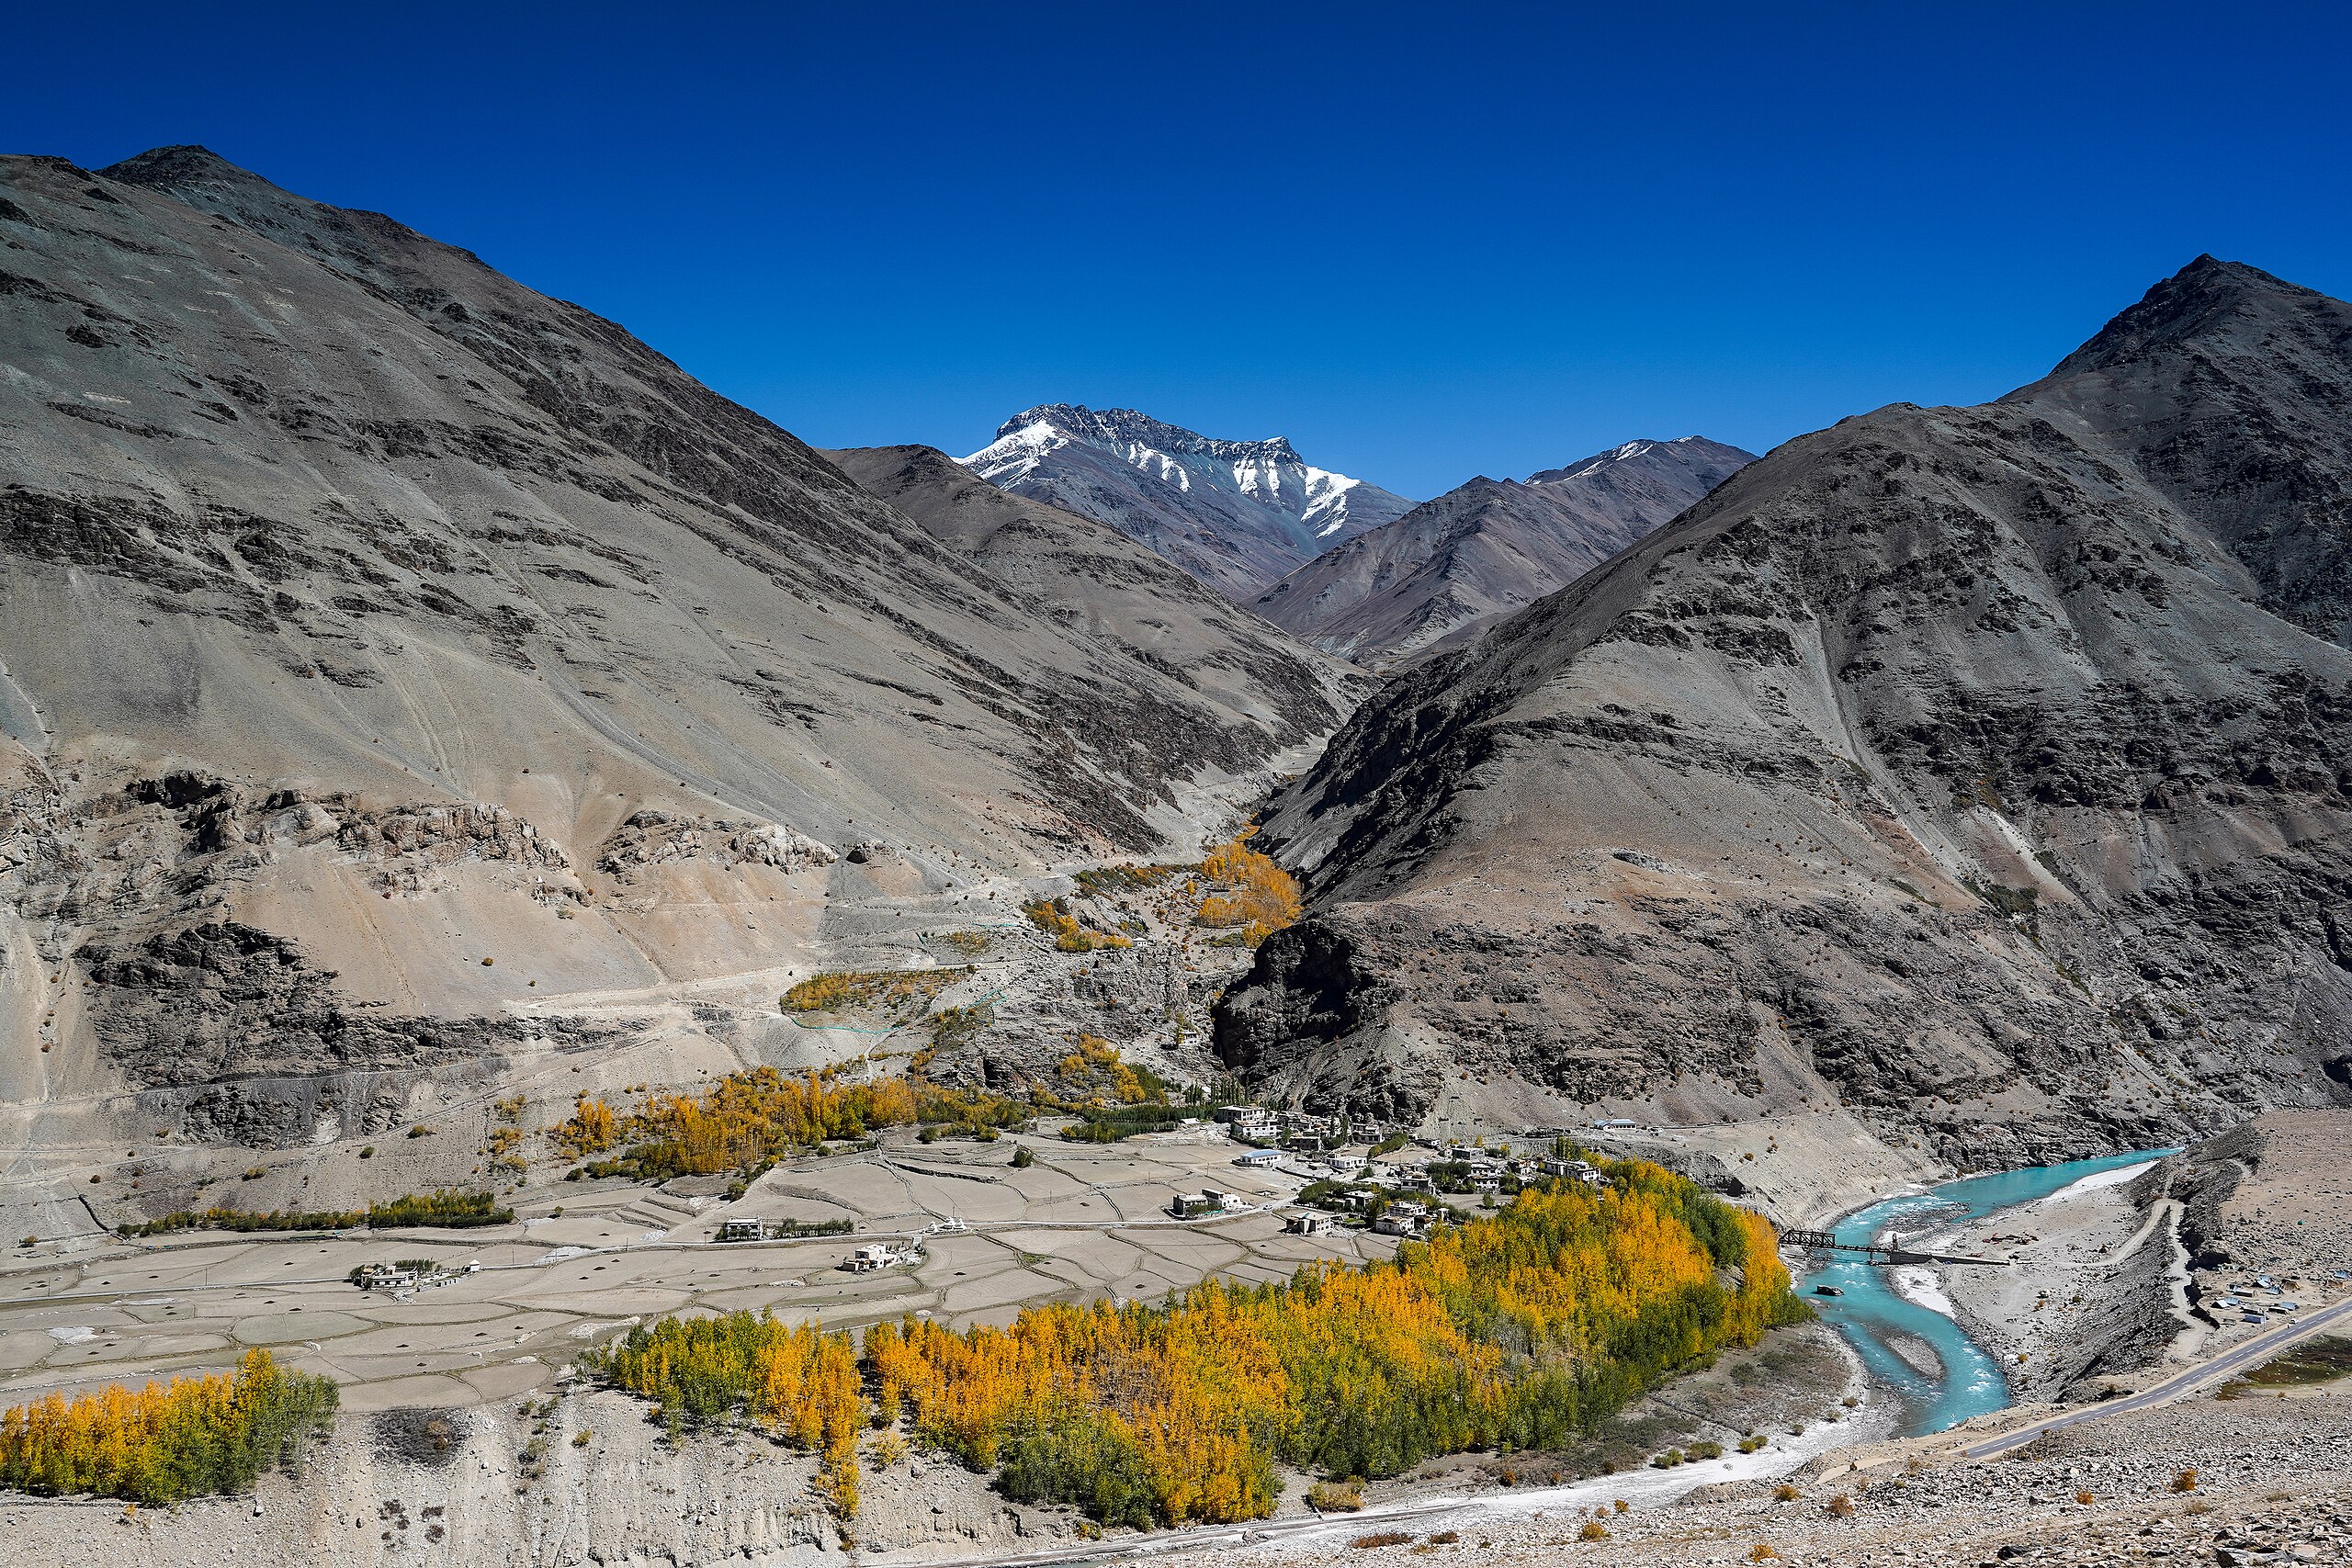 Shila village on the right bank of the Tsarap, Zanskar, Ladakh, India. Surrounded by groves of birch in autumn colouration.